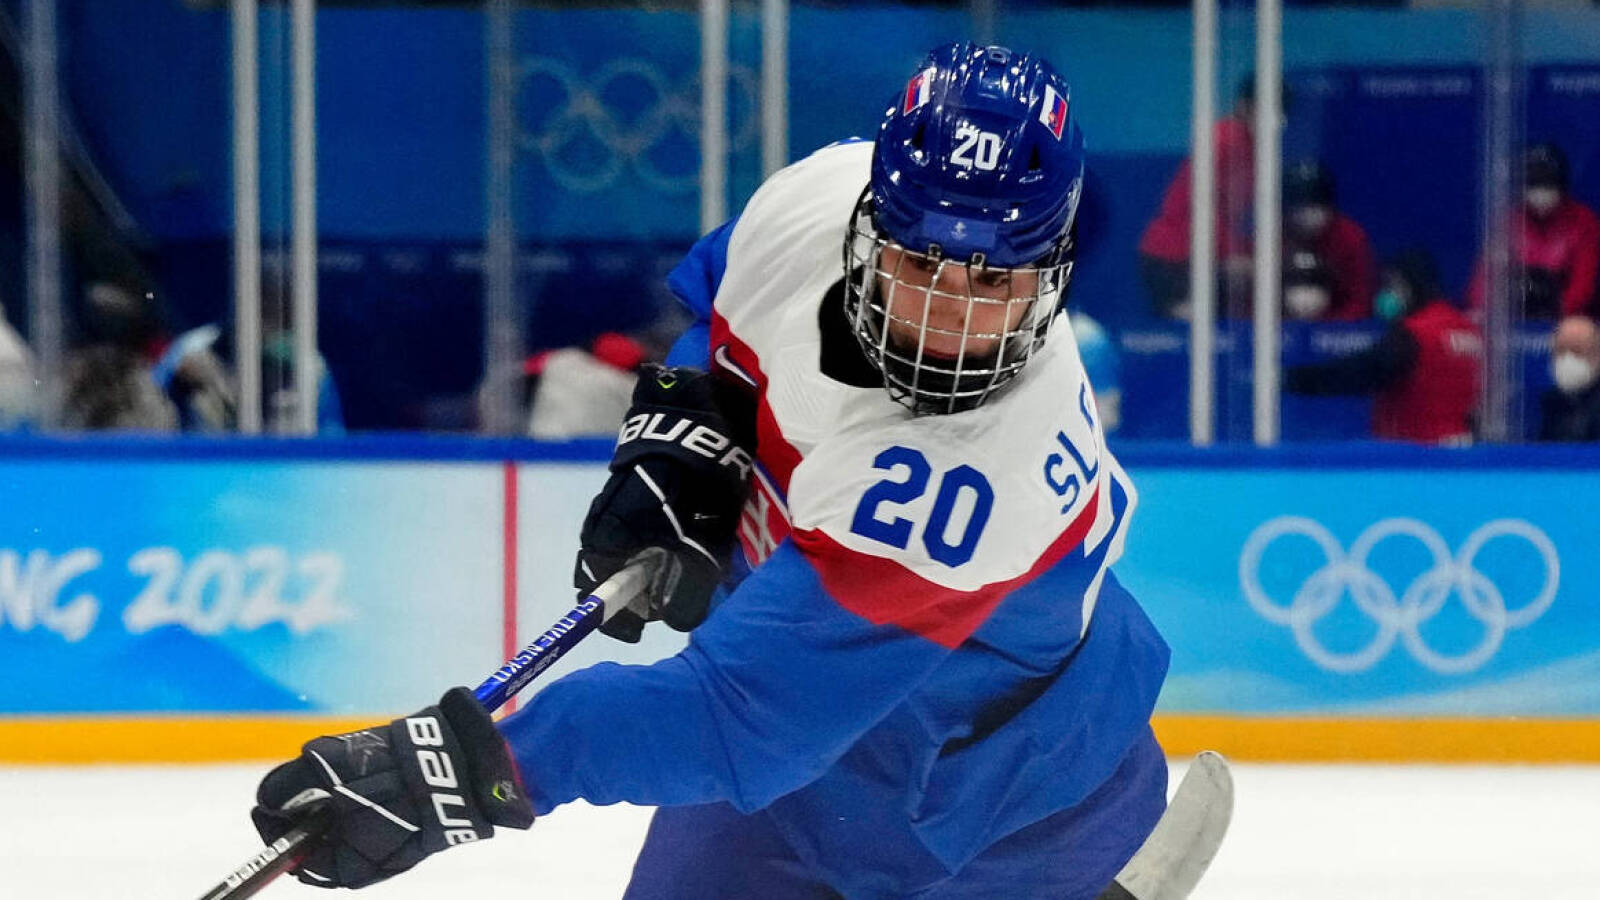 IIHF vyhlásila za najlepšieho olympijského hráča slovenského reprezentanta Juraja Slavkovského